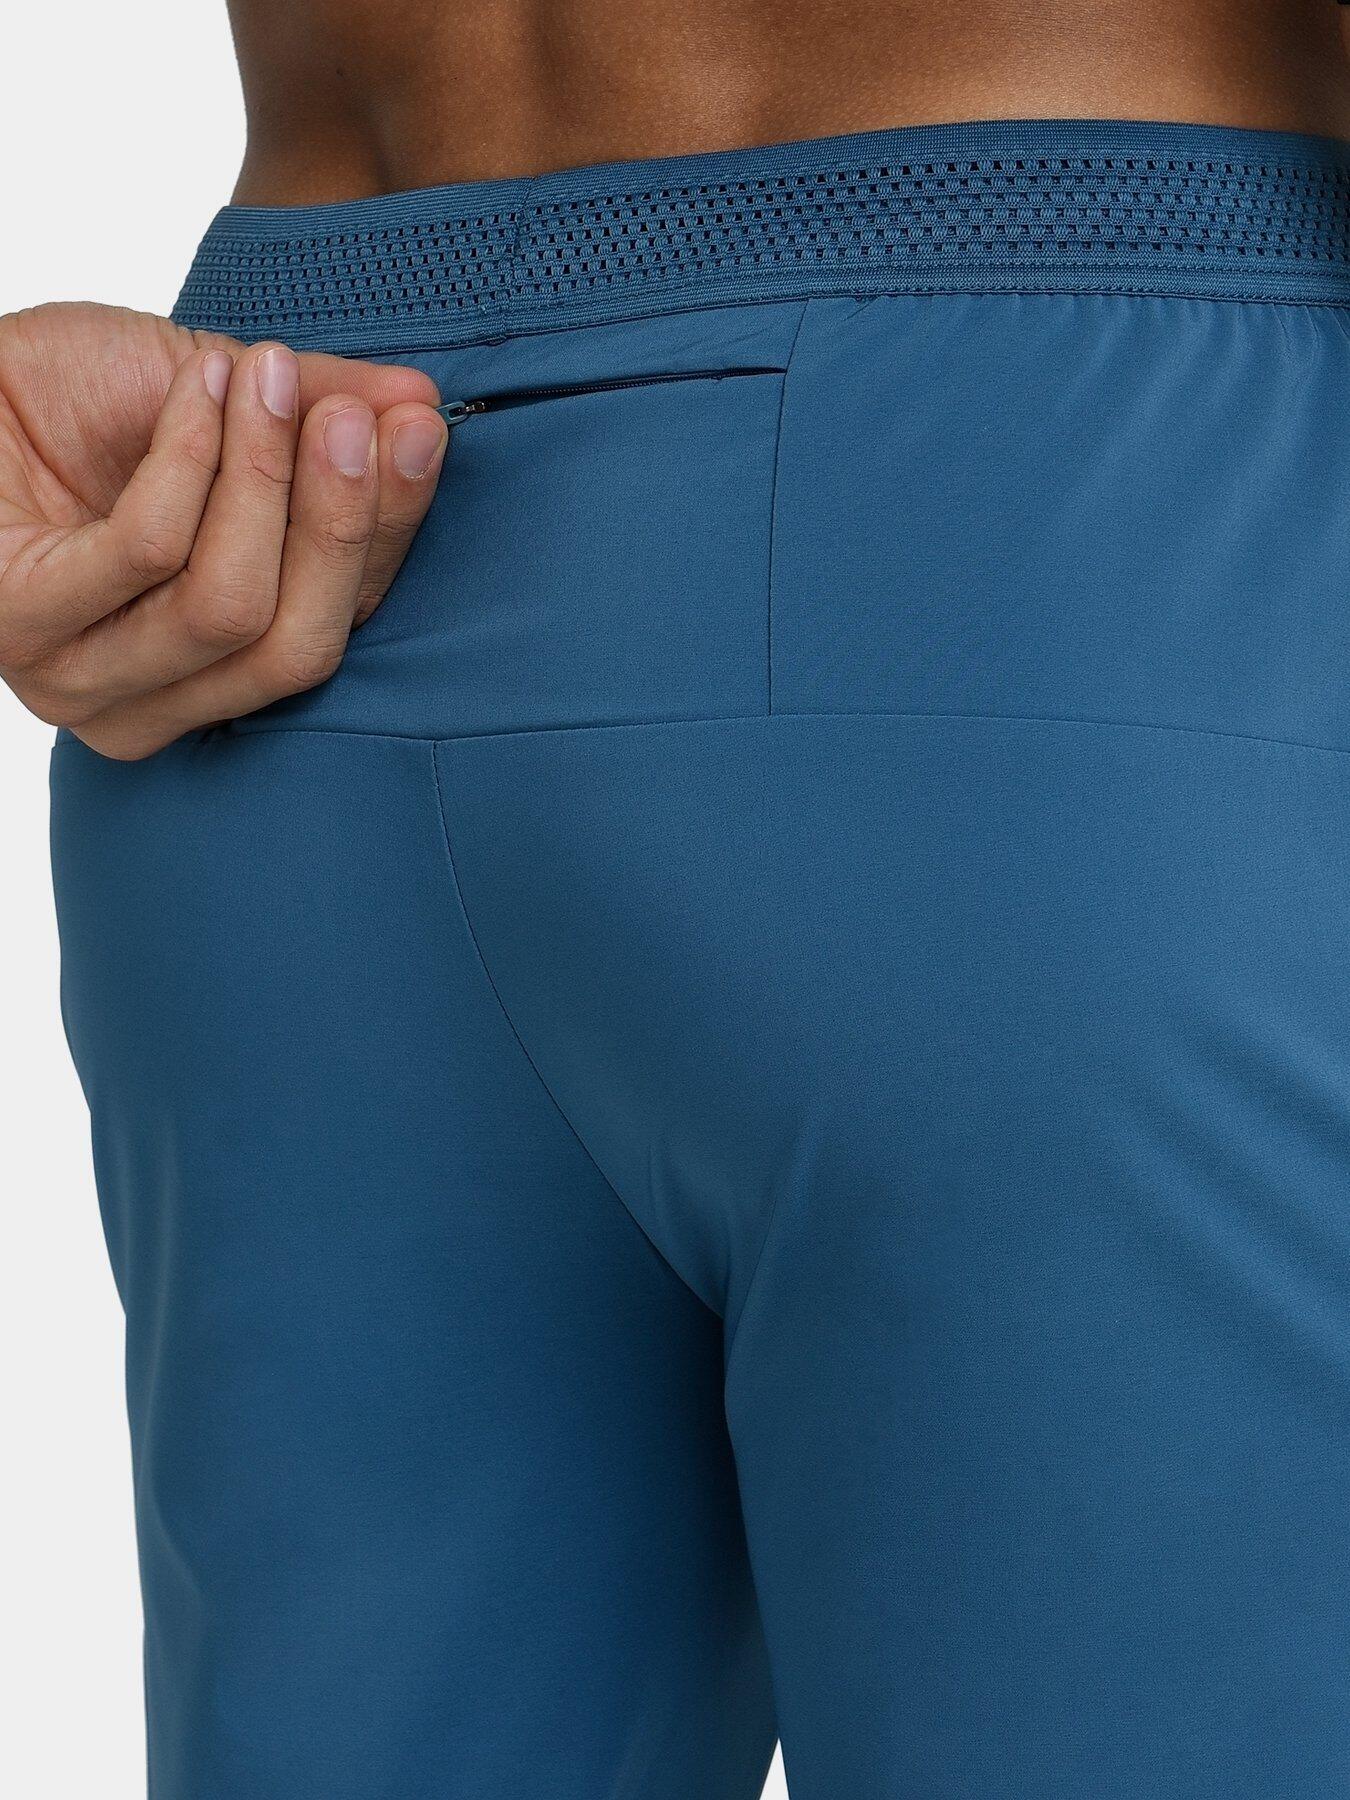 Men's Sprint Running Trouser with Zip Pockets - Iron Blue 3/5